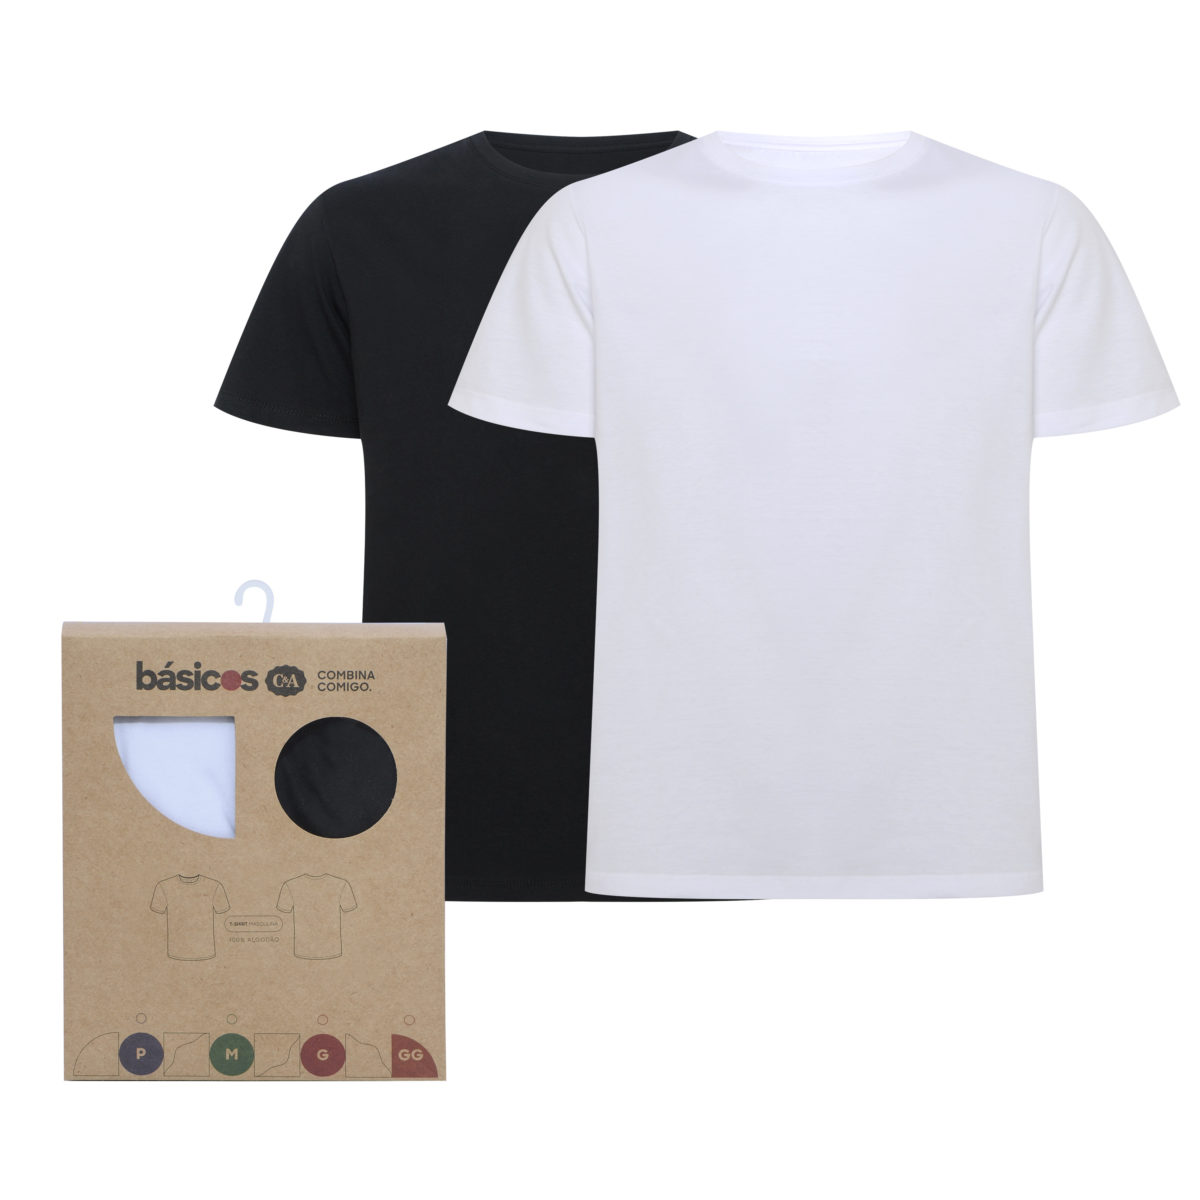 CEA_kit de 2 camisetas masculinas básicas flame manga curta gola careca multicor_R�49.99